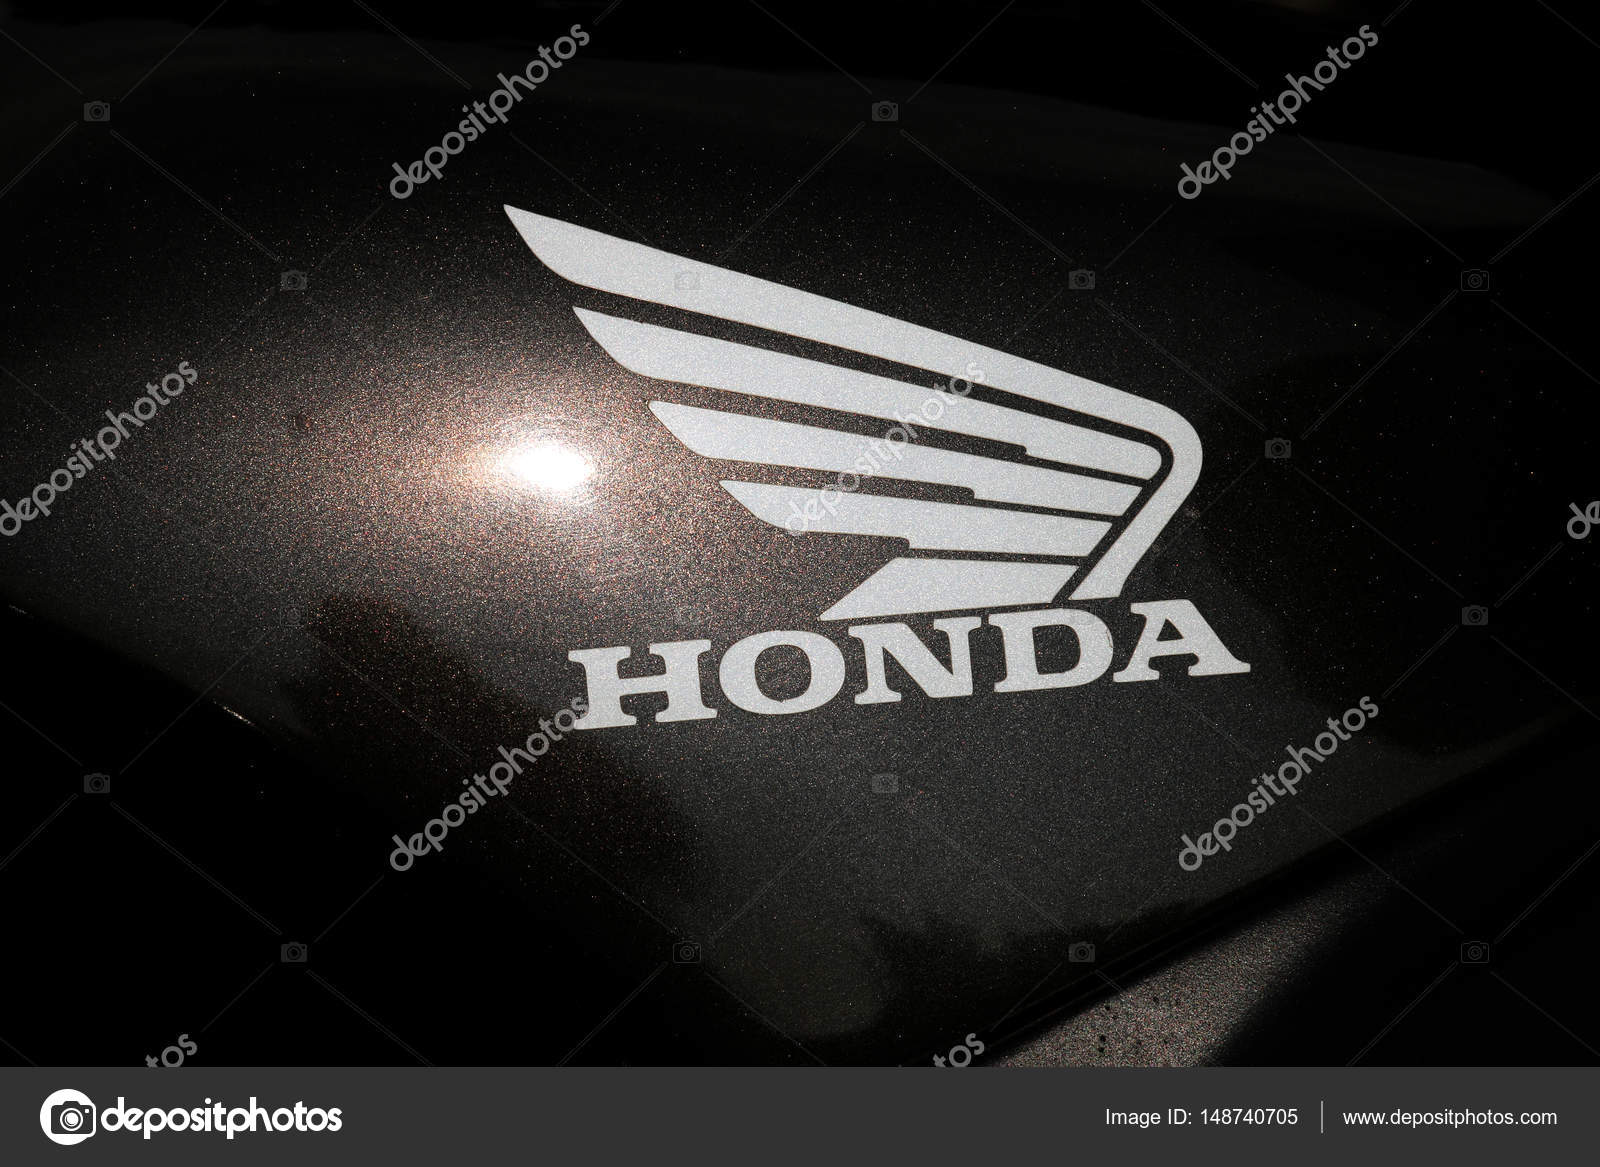 Honda motorcycle Stock Photos, Royalty Free Honda motorcycle Images |  Depositphotos